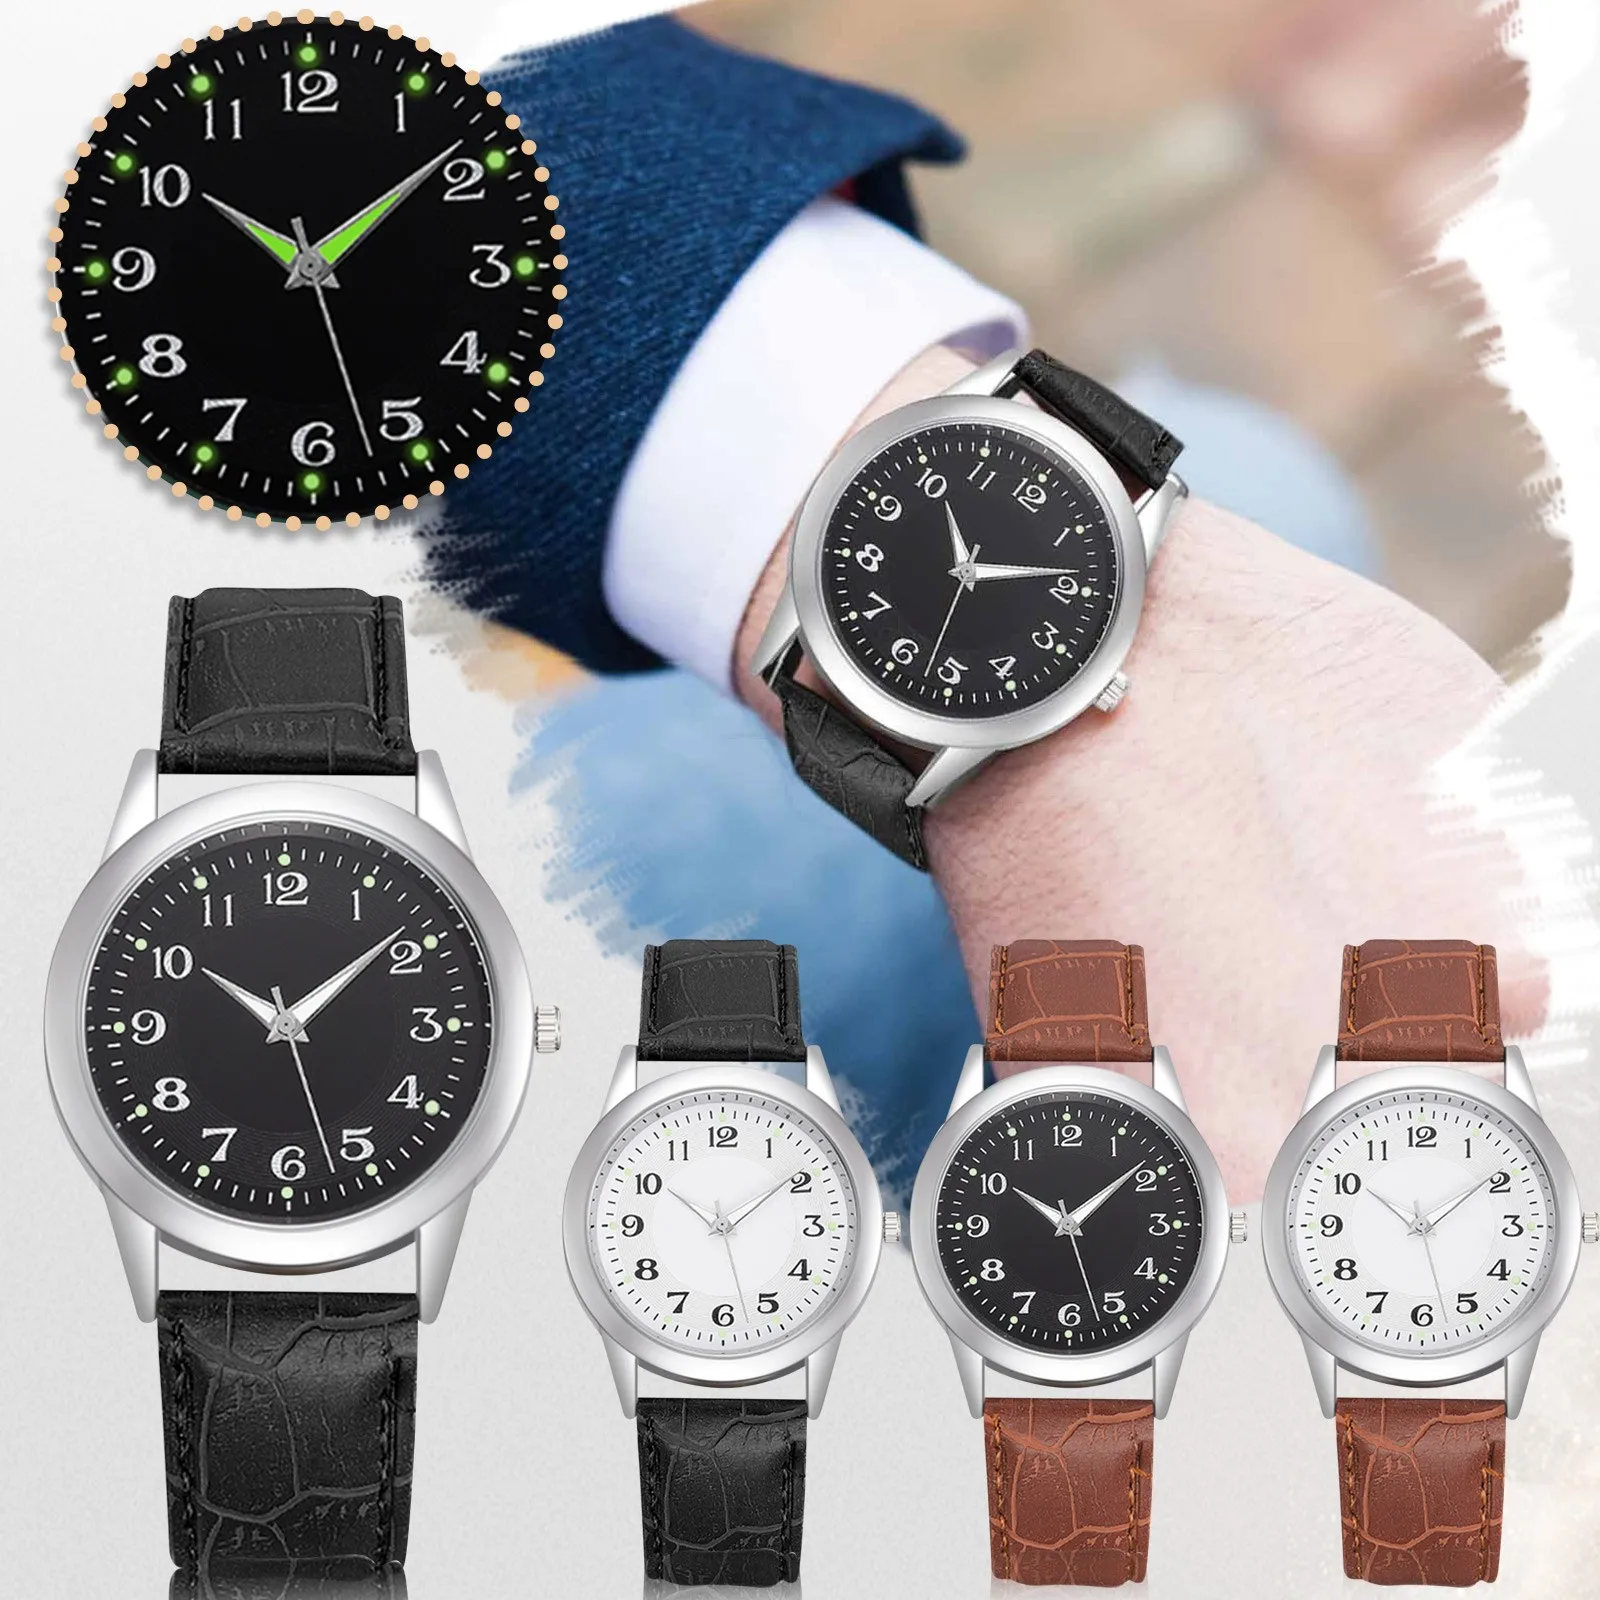 

Fashion Luminous Men'S Watches Simple Round Digital Dial Quartz Watch For Men Casual Leather Band Male Watch Kol Saati Erkek